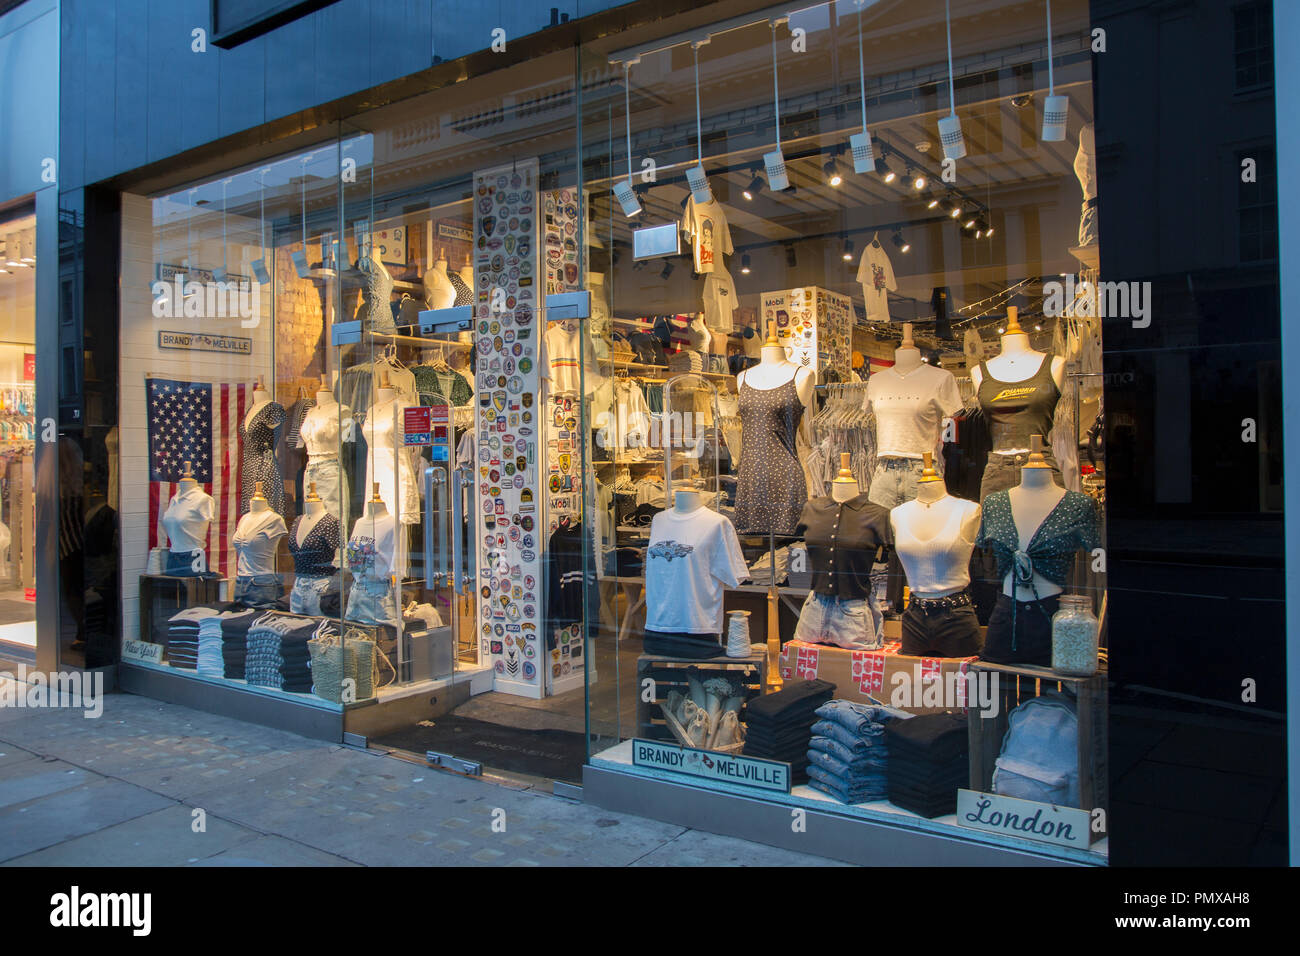 Brandy und Melville Kleidung Shop; Kings Road, Chelsea, London, England, UK  Stockfotografie - Alamy